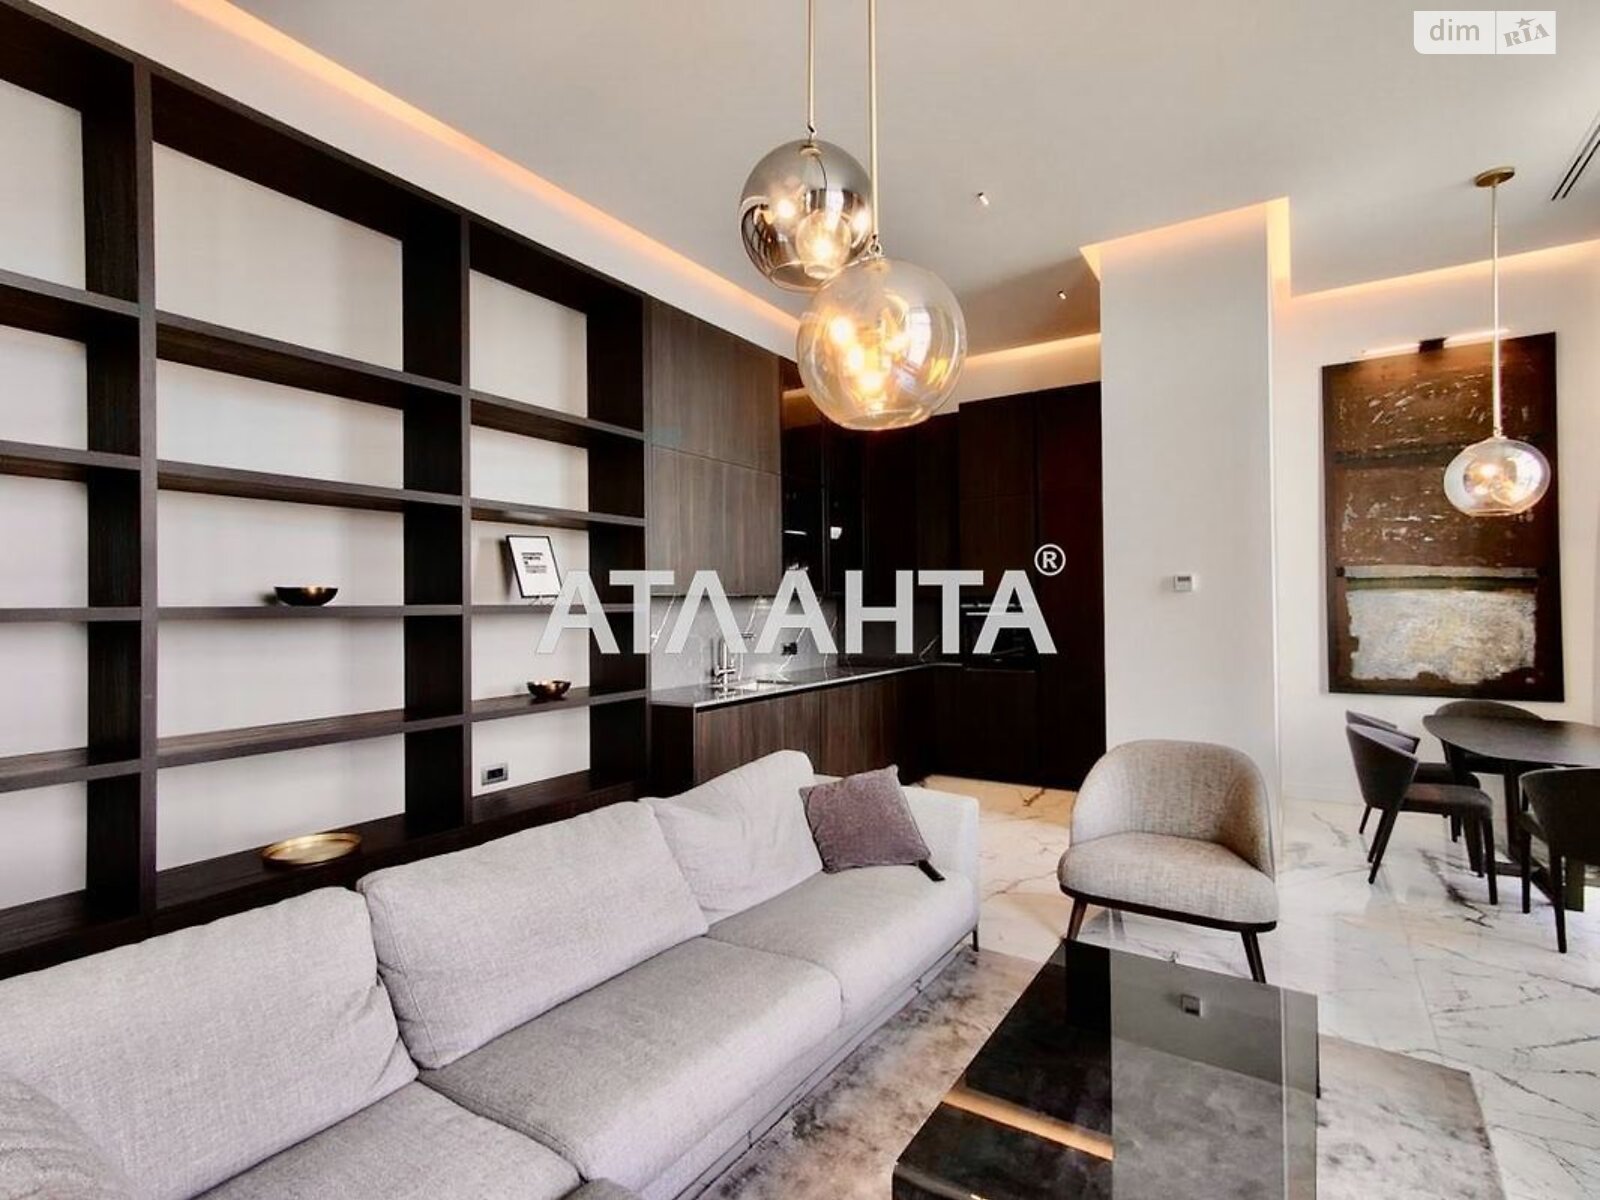 Продажа четырехкомнатной квартиры в Одессе, на ул. Леонтовича 16А, район Приморский фото 1